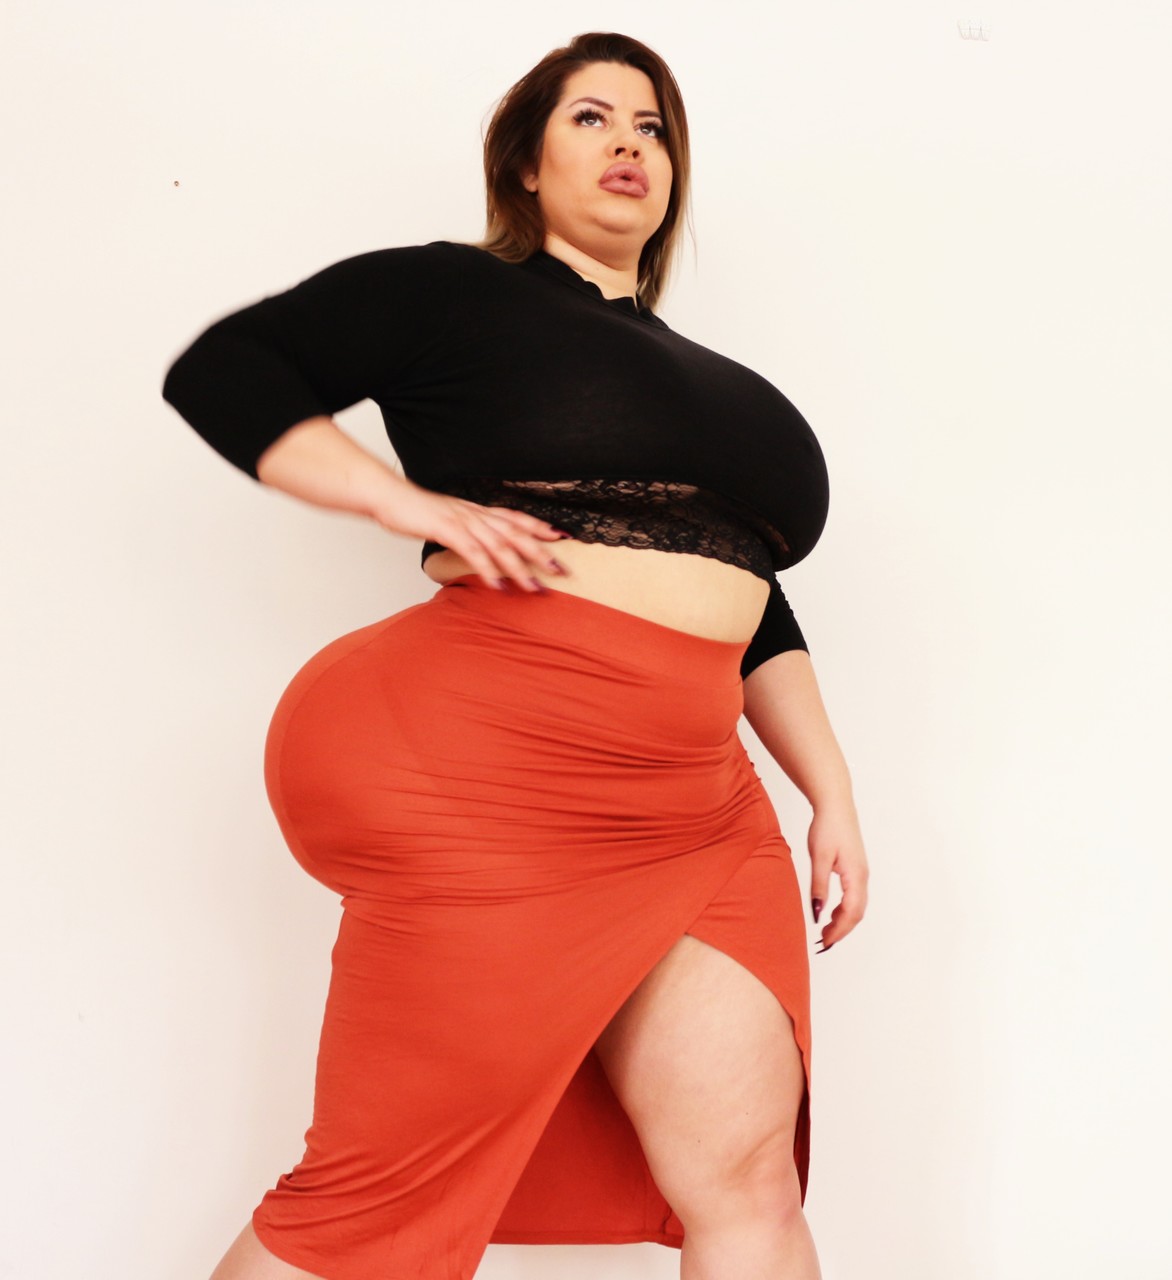 Stunning MILF fatty Natasha Crown flaunting her very big ass in a tight skirt 色情照片 #423816654 | Natasha Crown Pics, Natasha Crown, BBW, 手机色情